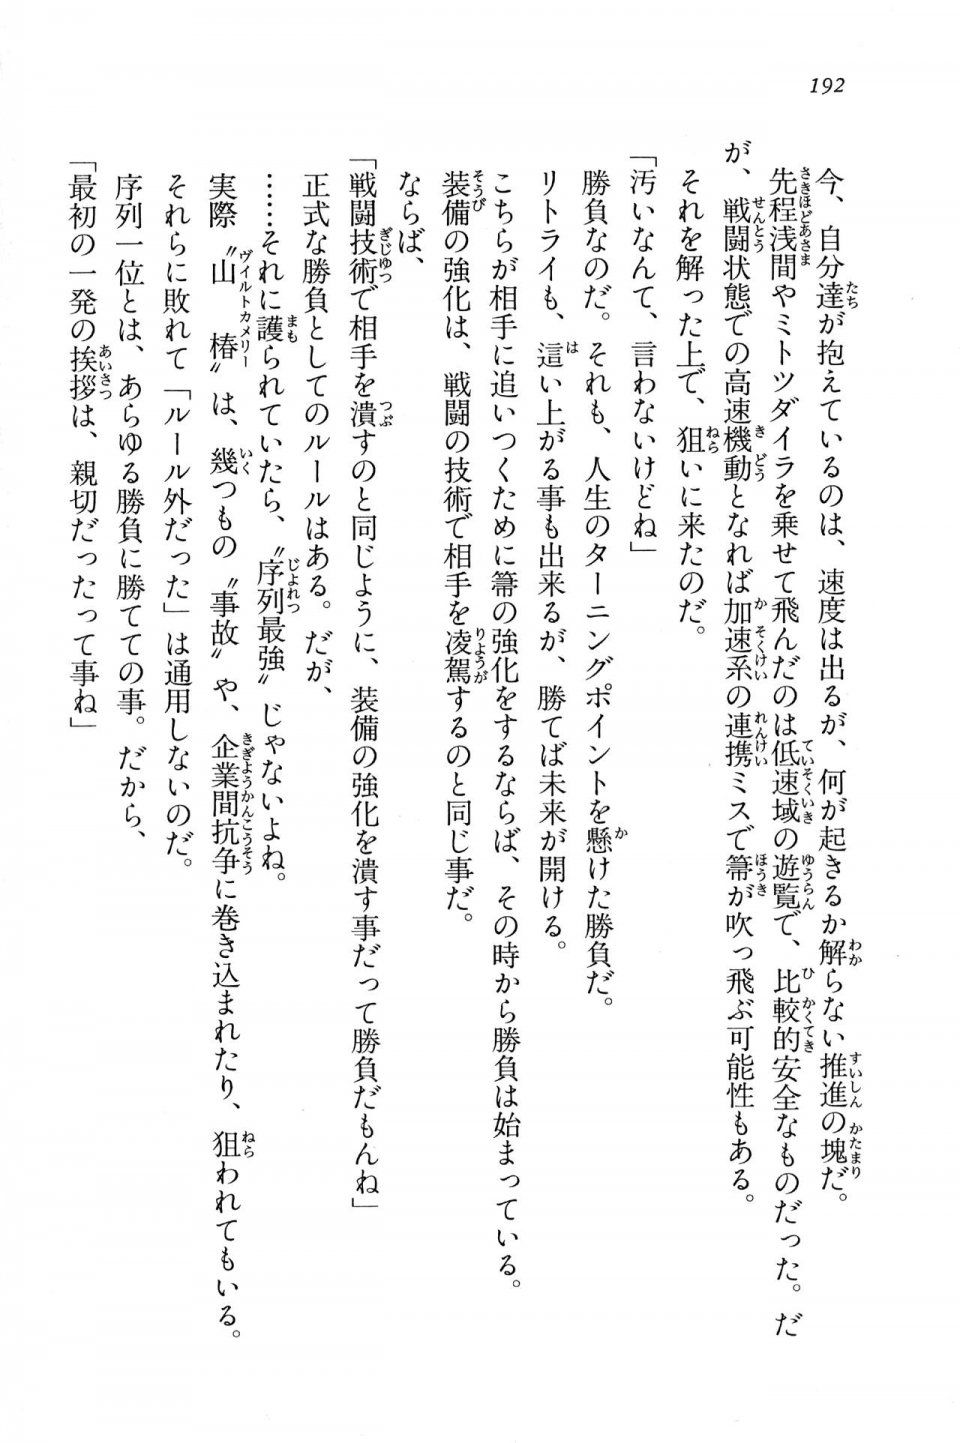 Kyoukai Senjou no Horizon BD Special Mininovel Vol 7(4A) - Photo #196